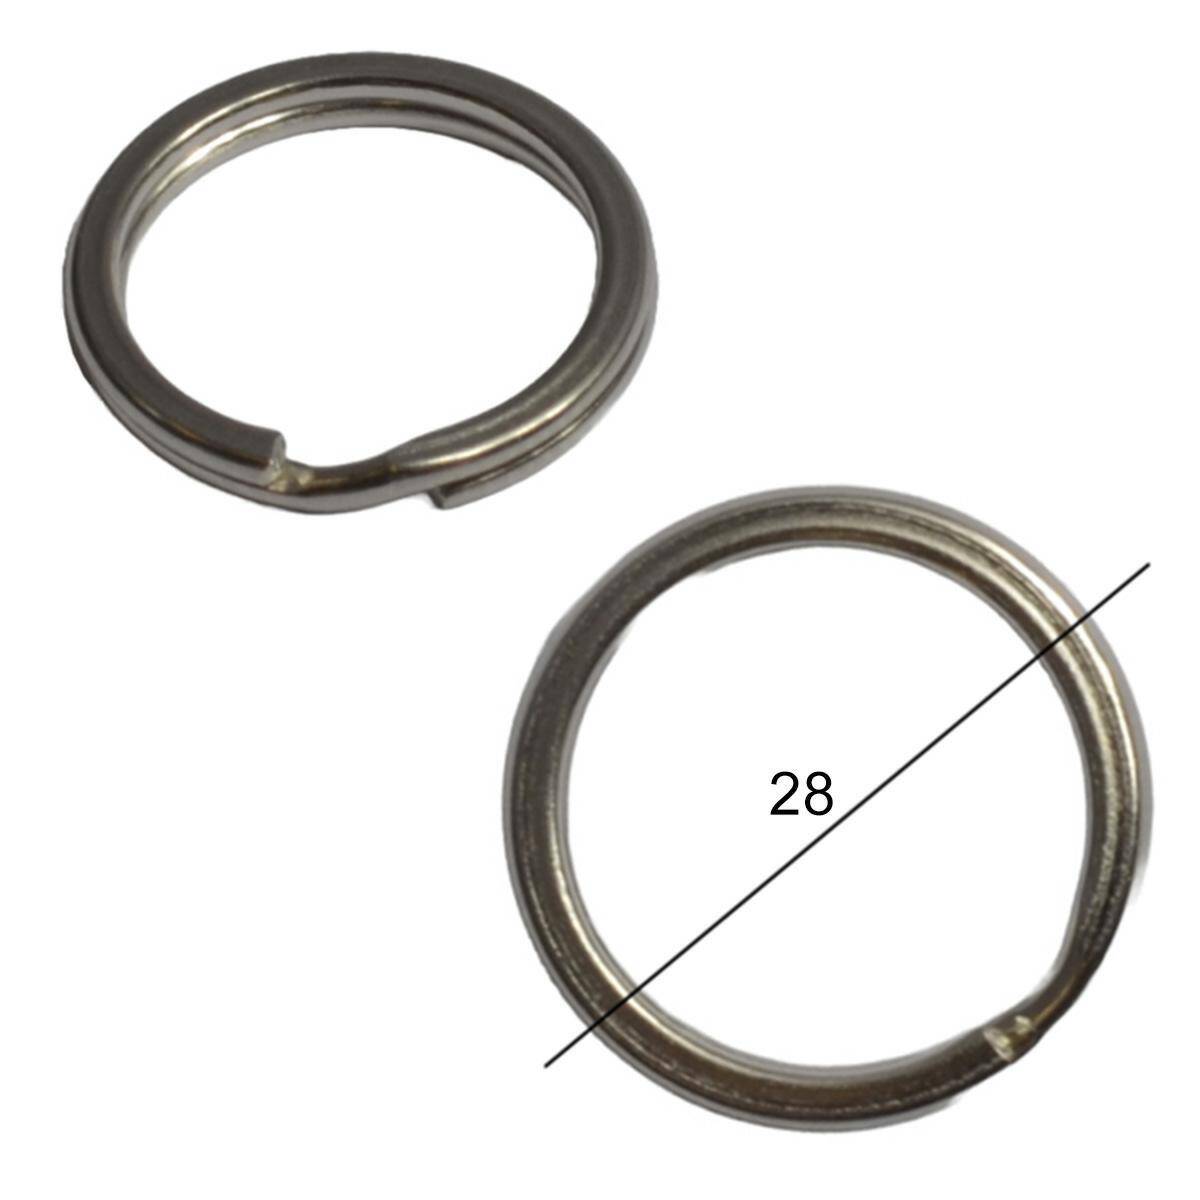 Key rings - flat - 28 mm